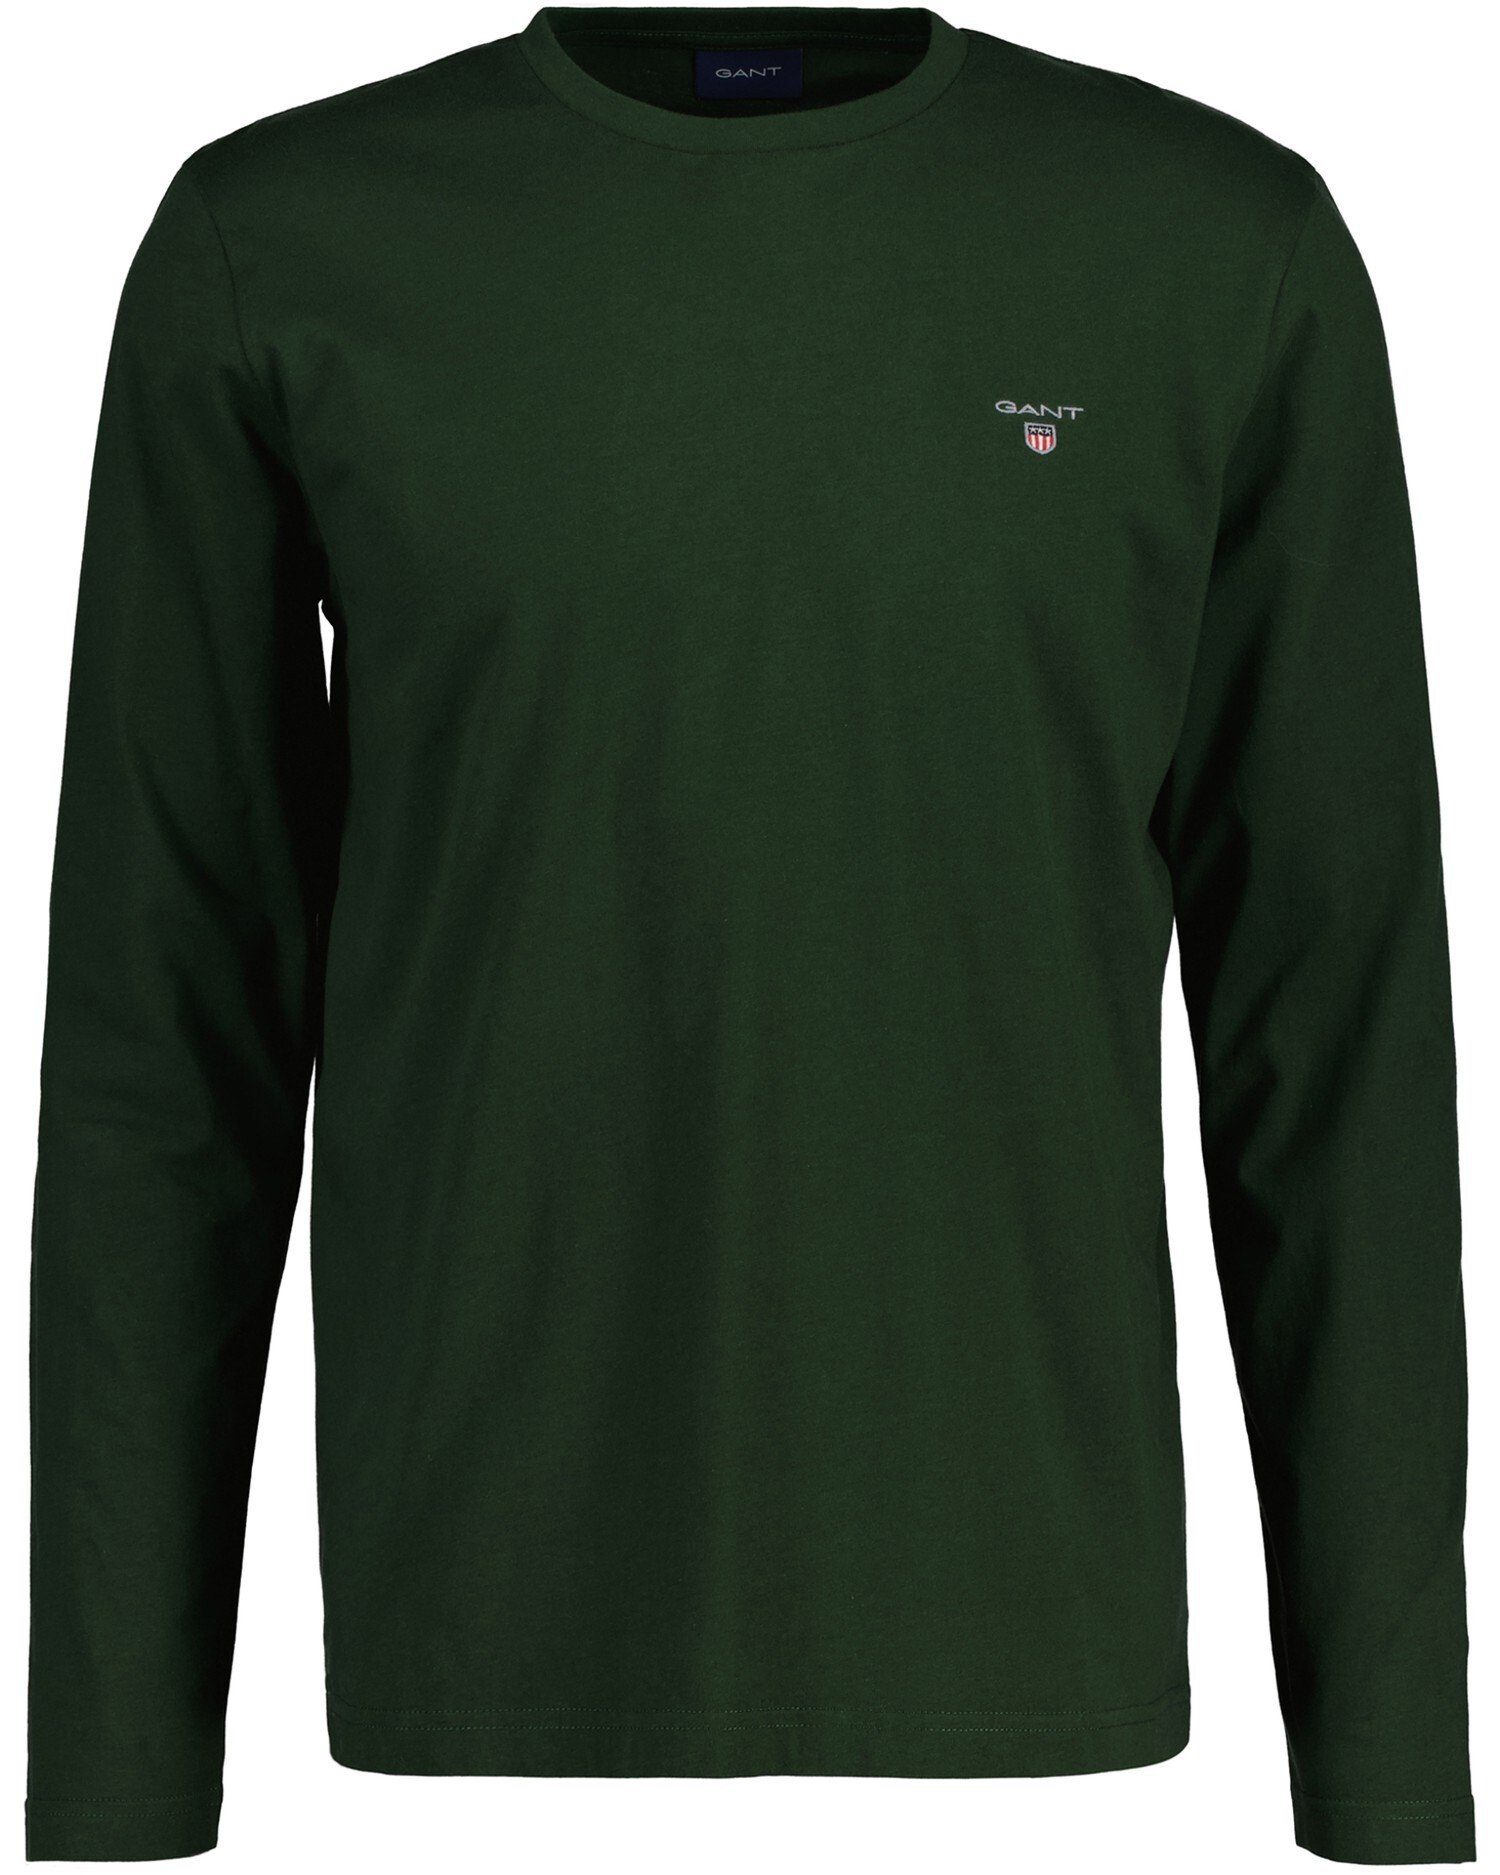 Gant T-Shirt Herren Grün - Langarm T-Shirt ORIGINAL LS, Rundhals